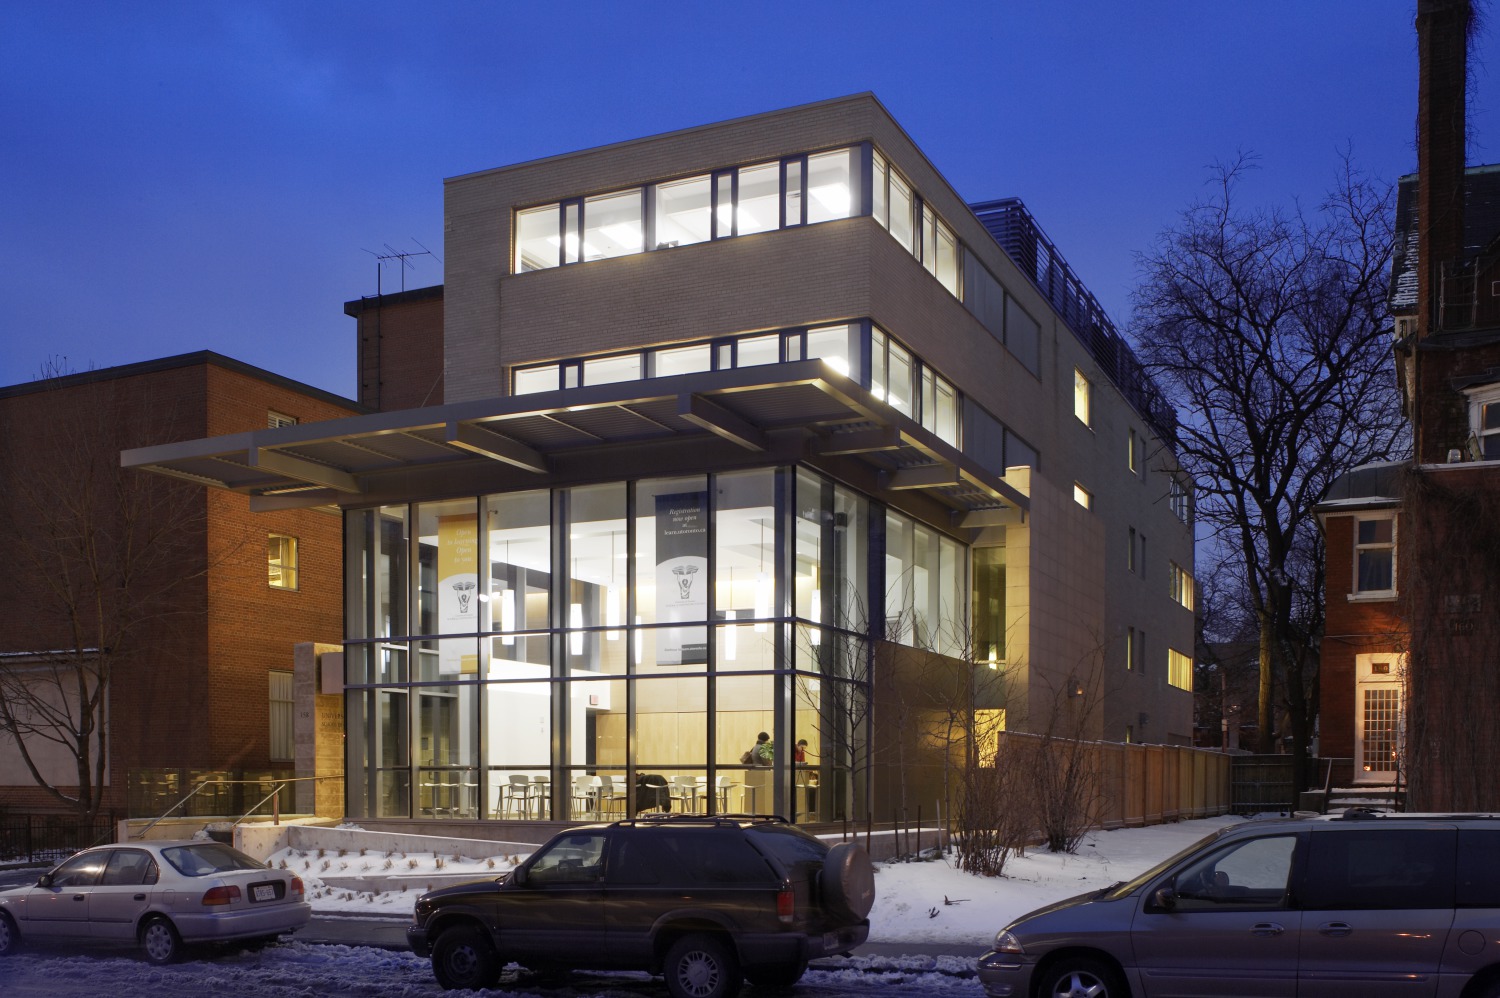 University of Toronto School Continuing Studies Moriyama Teshima campus building design architect architecture